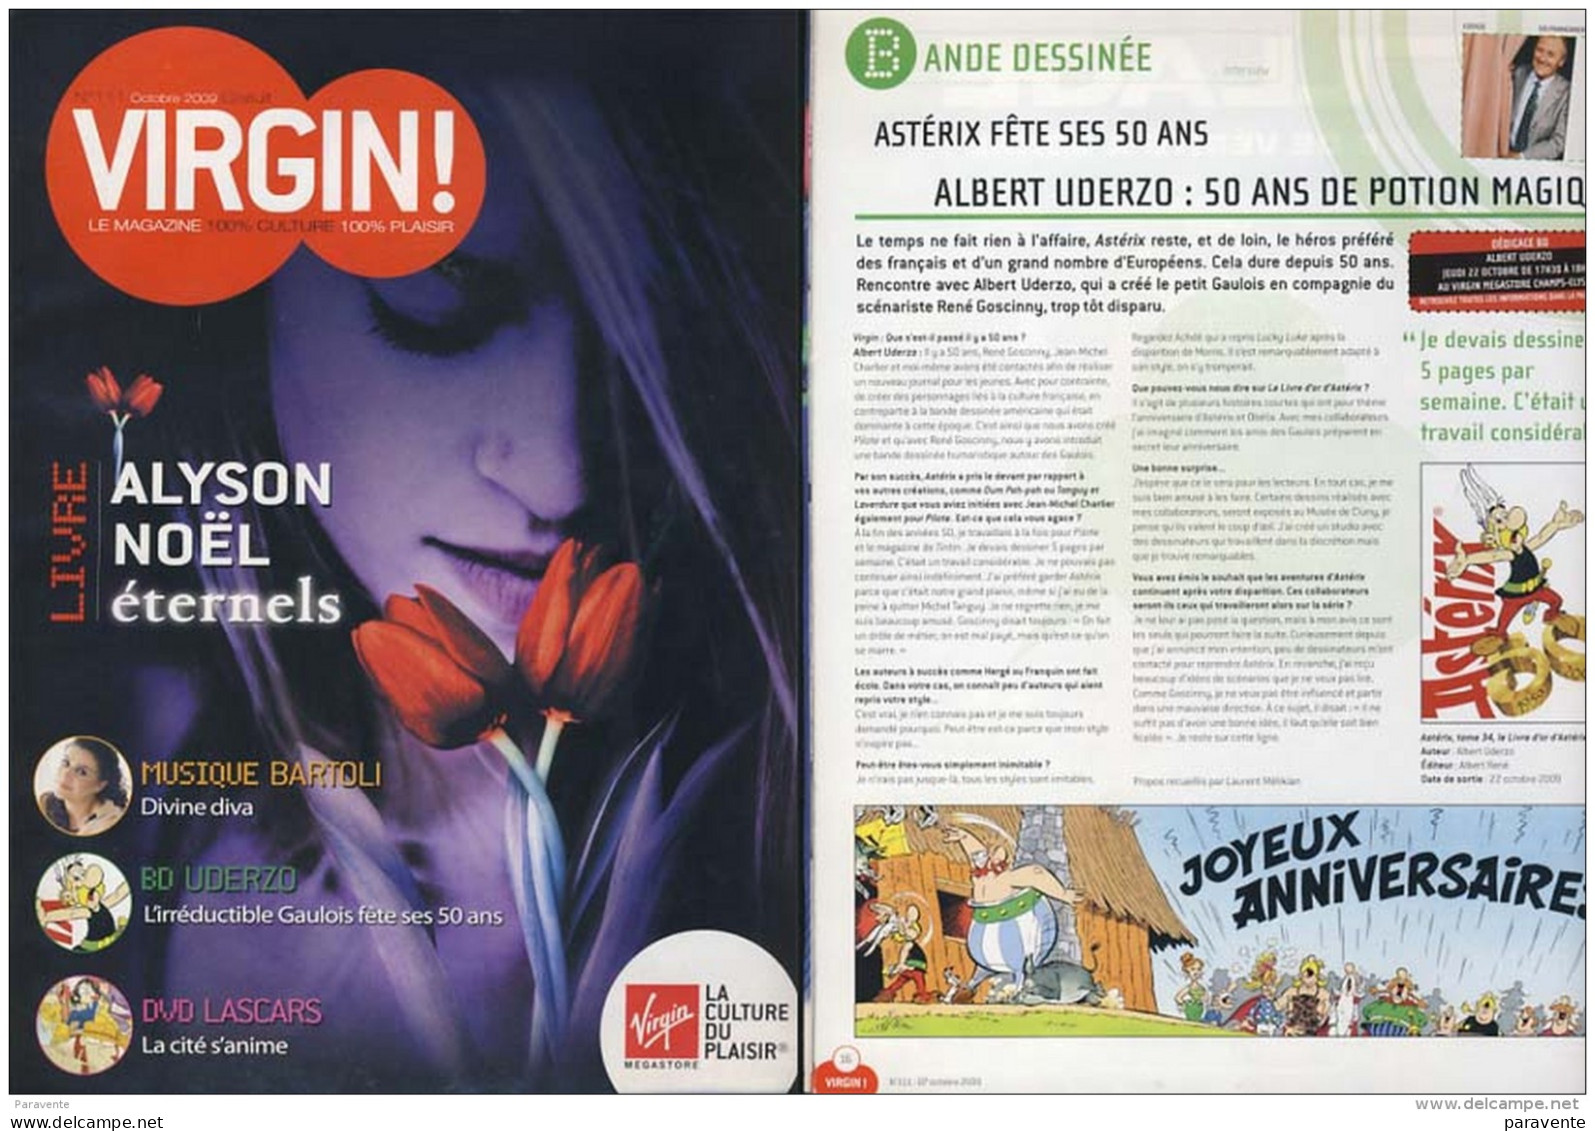 ASTERIX : Magazine VIRGIN 111 , 2009 - Astérix